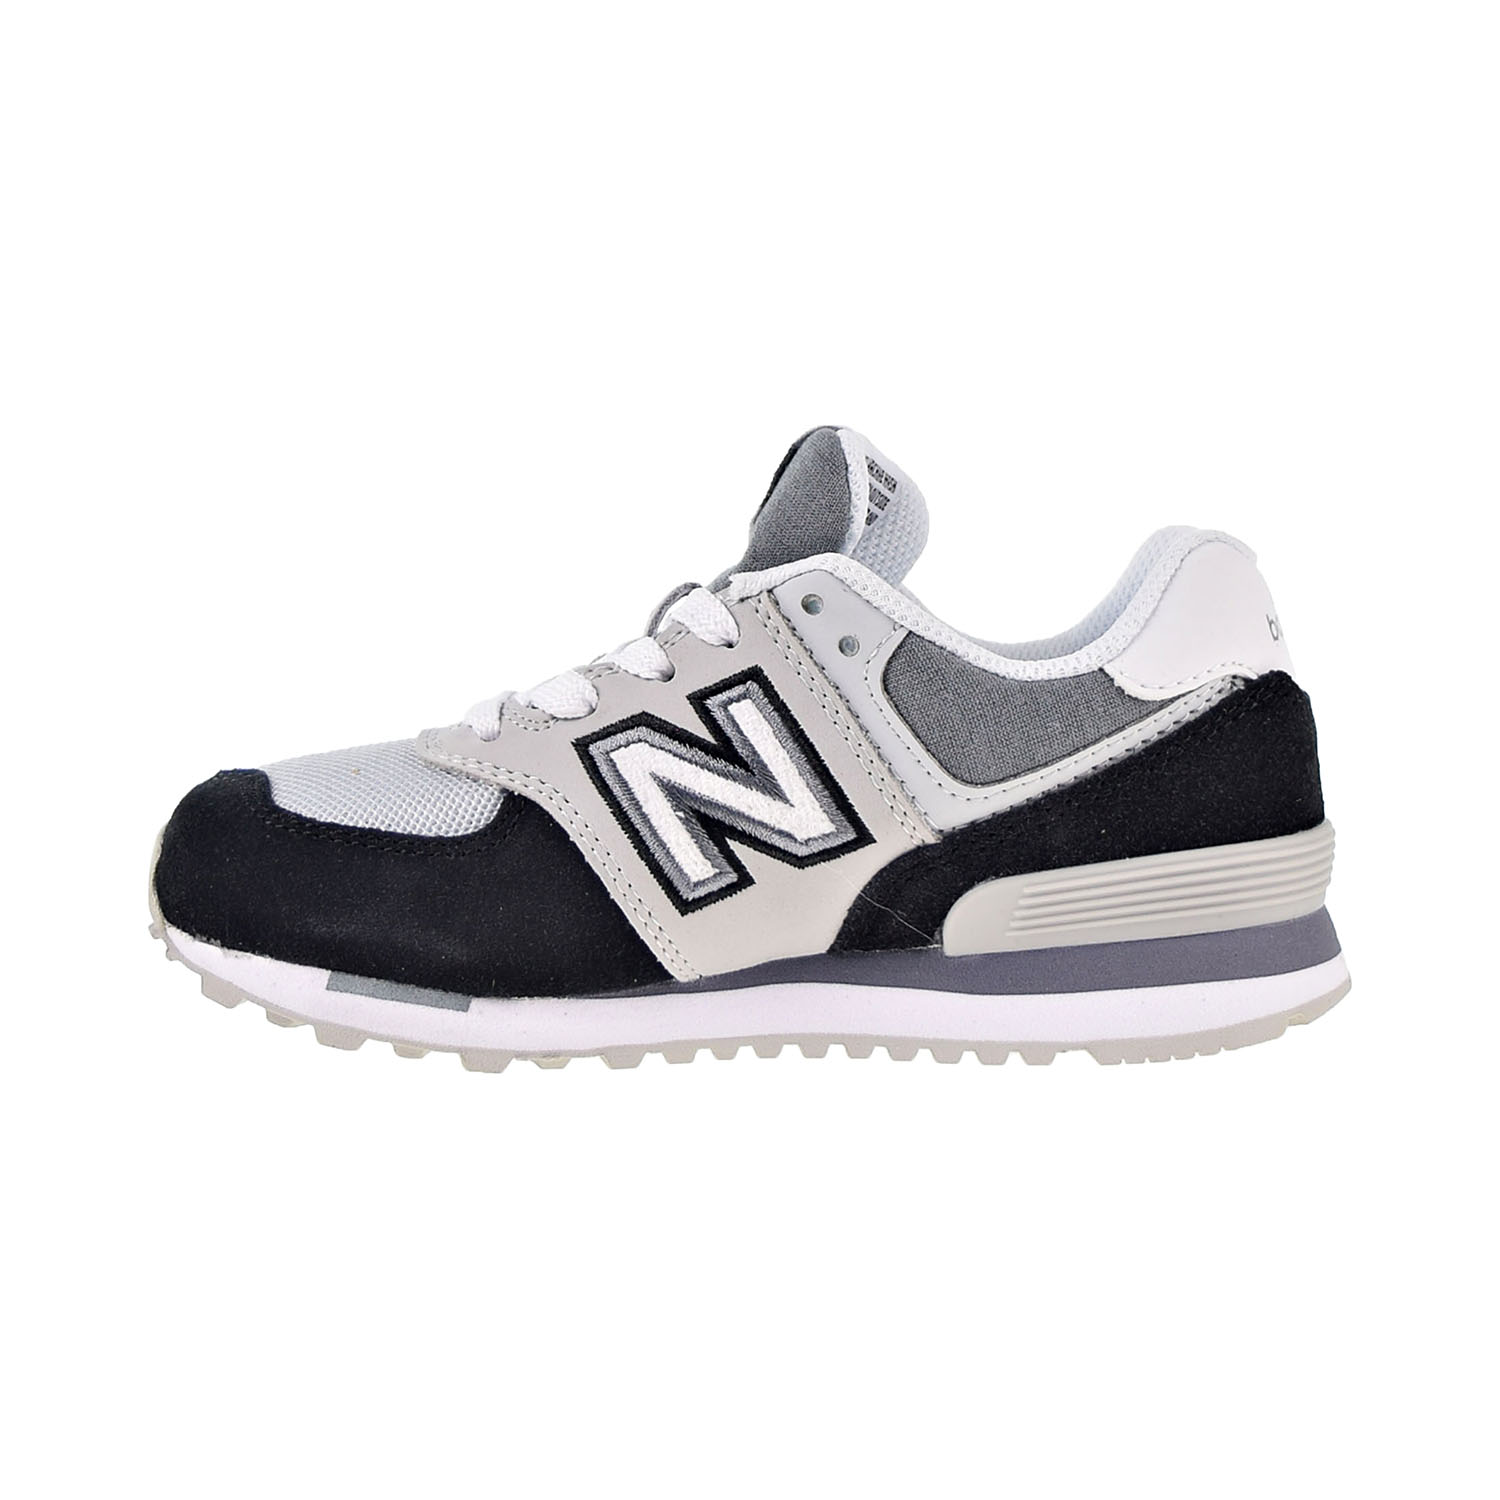 New Balance 574 Varsity Sport Little Kids Shoes Gray-Black-White pc574-nlc - image 4 of 6